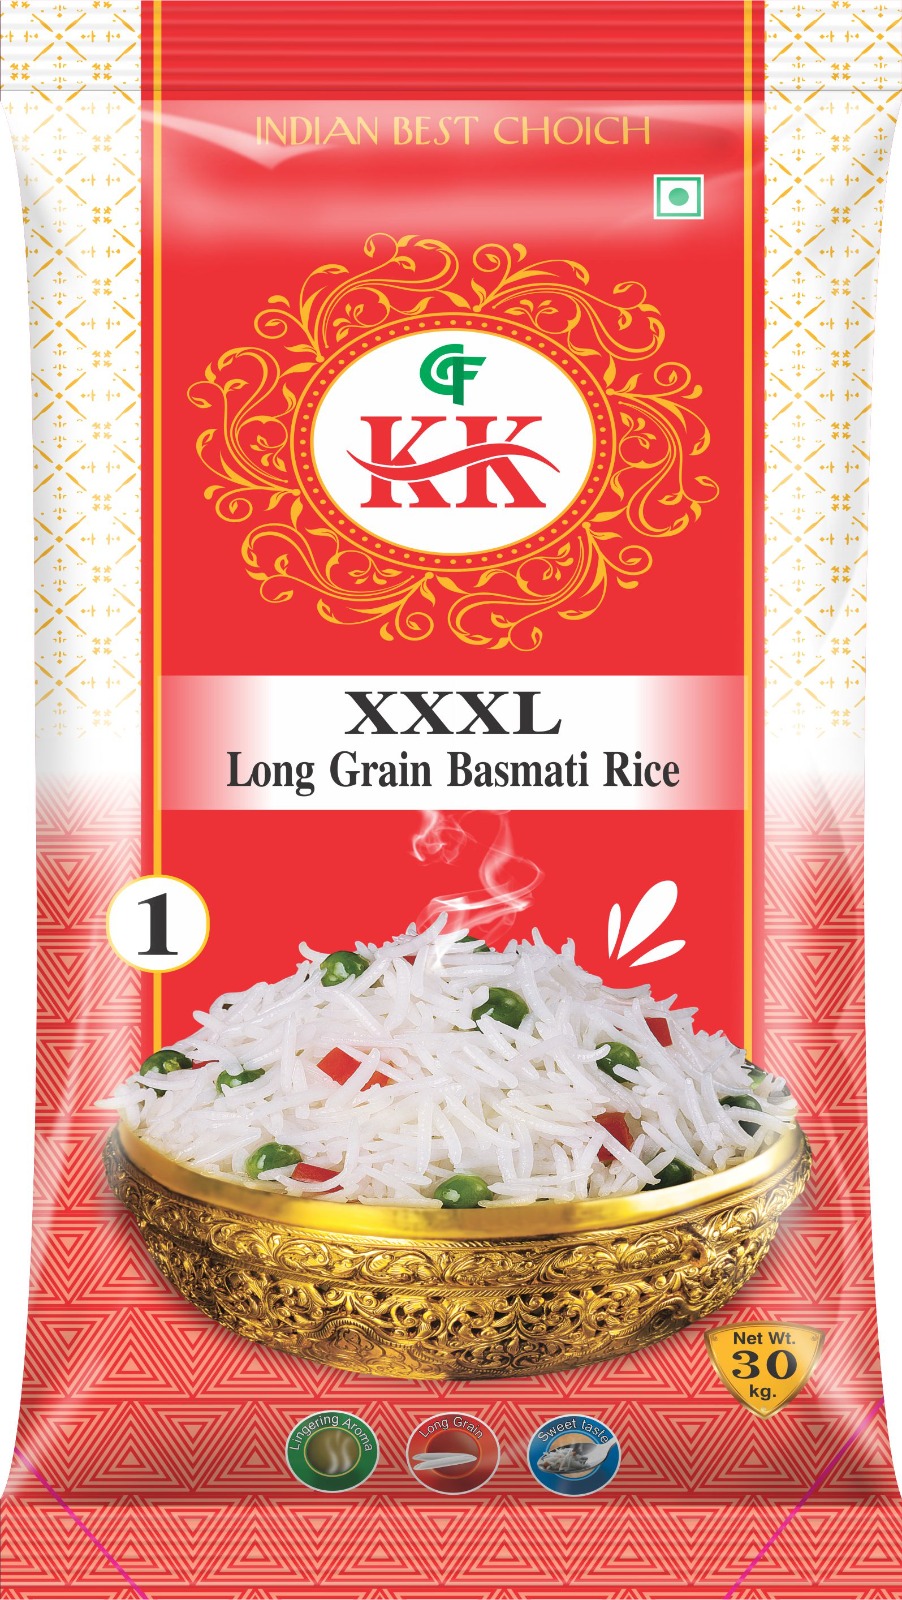 1401 Rice(xxxl long grain basmati rice)